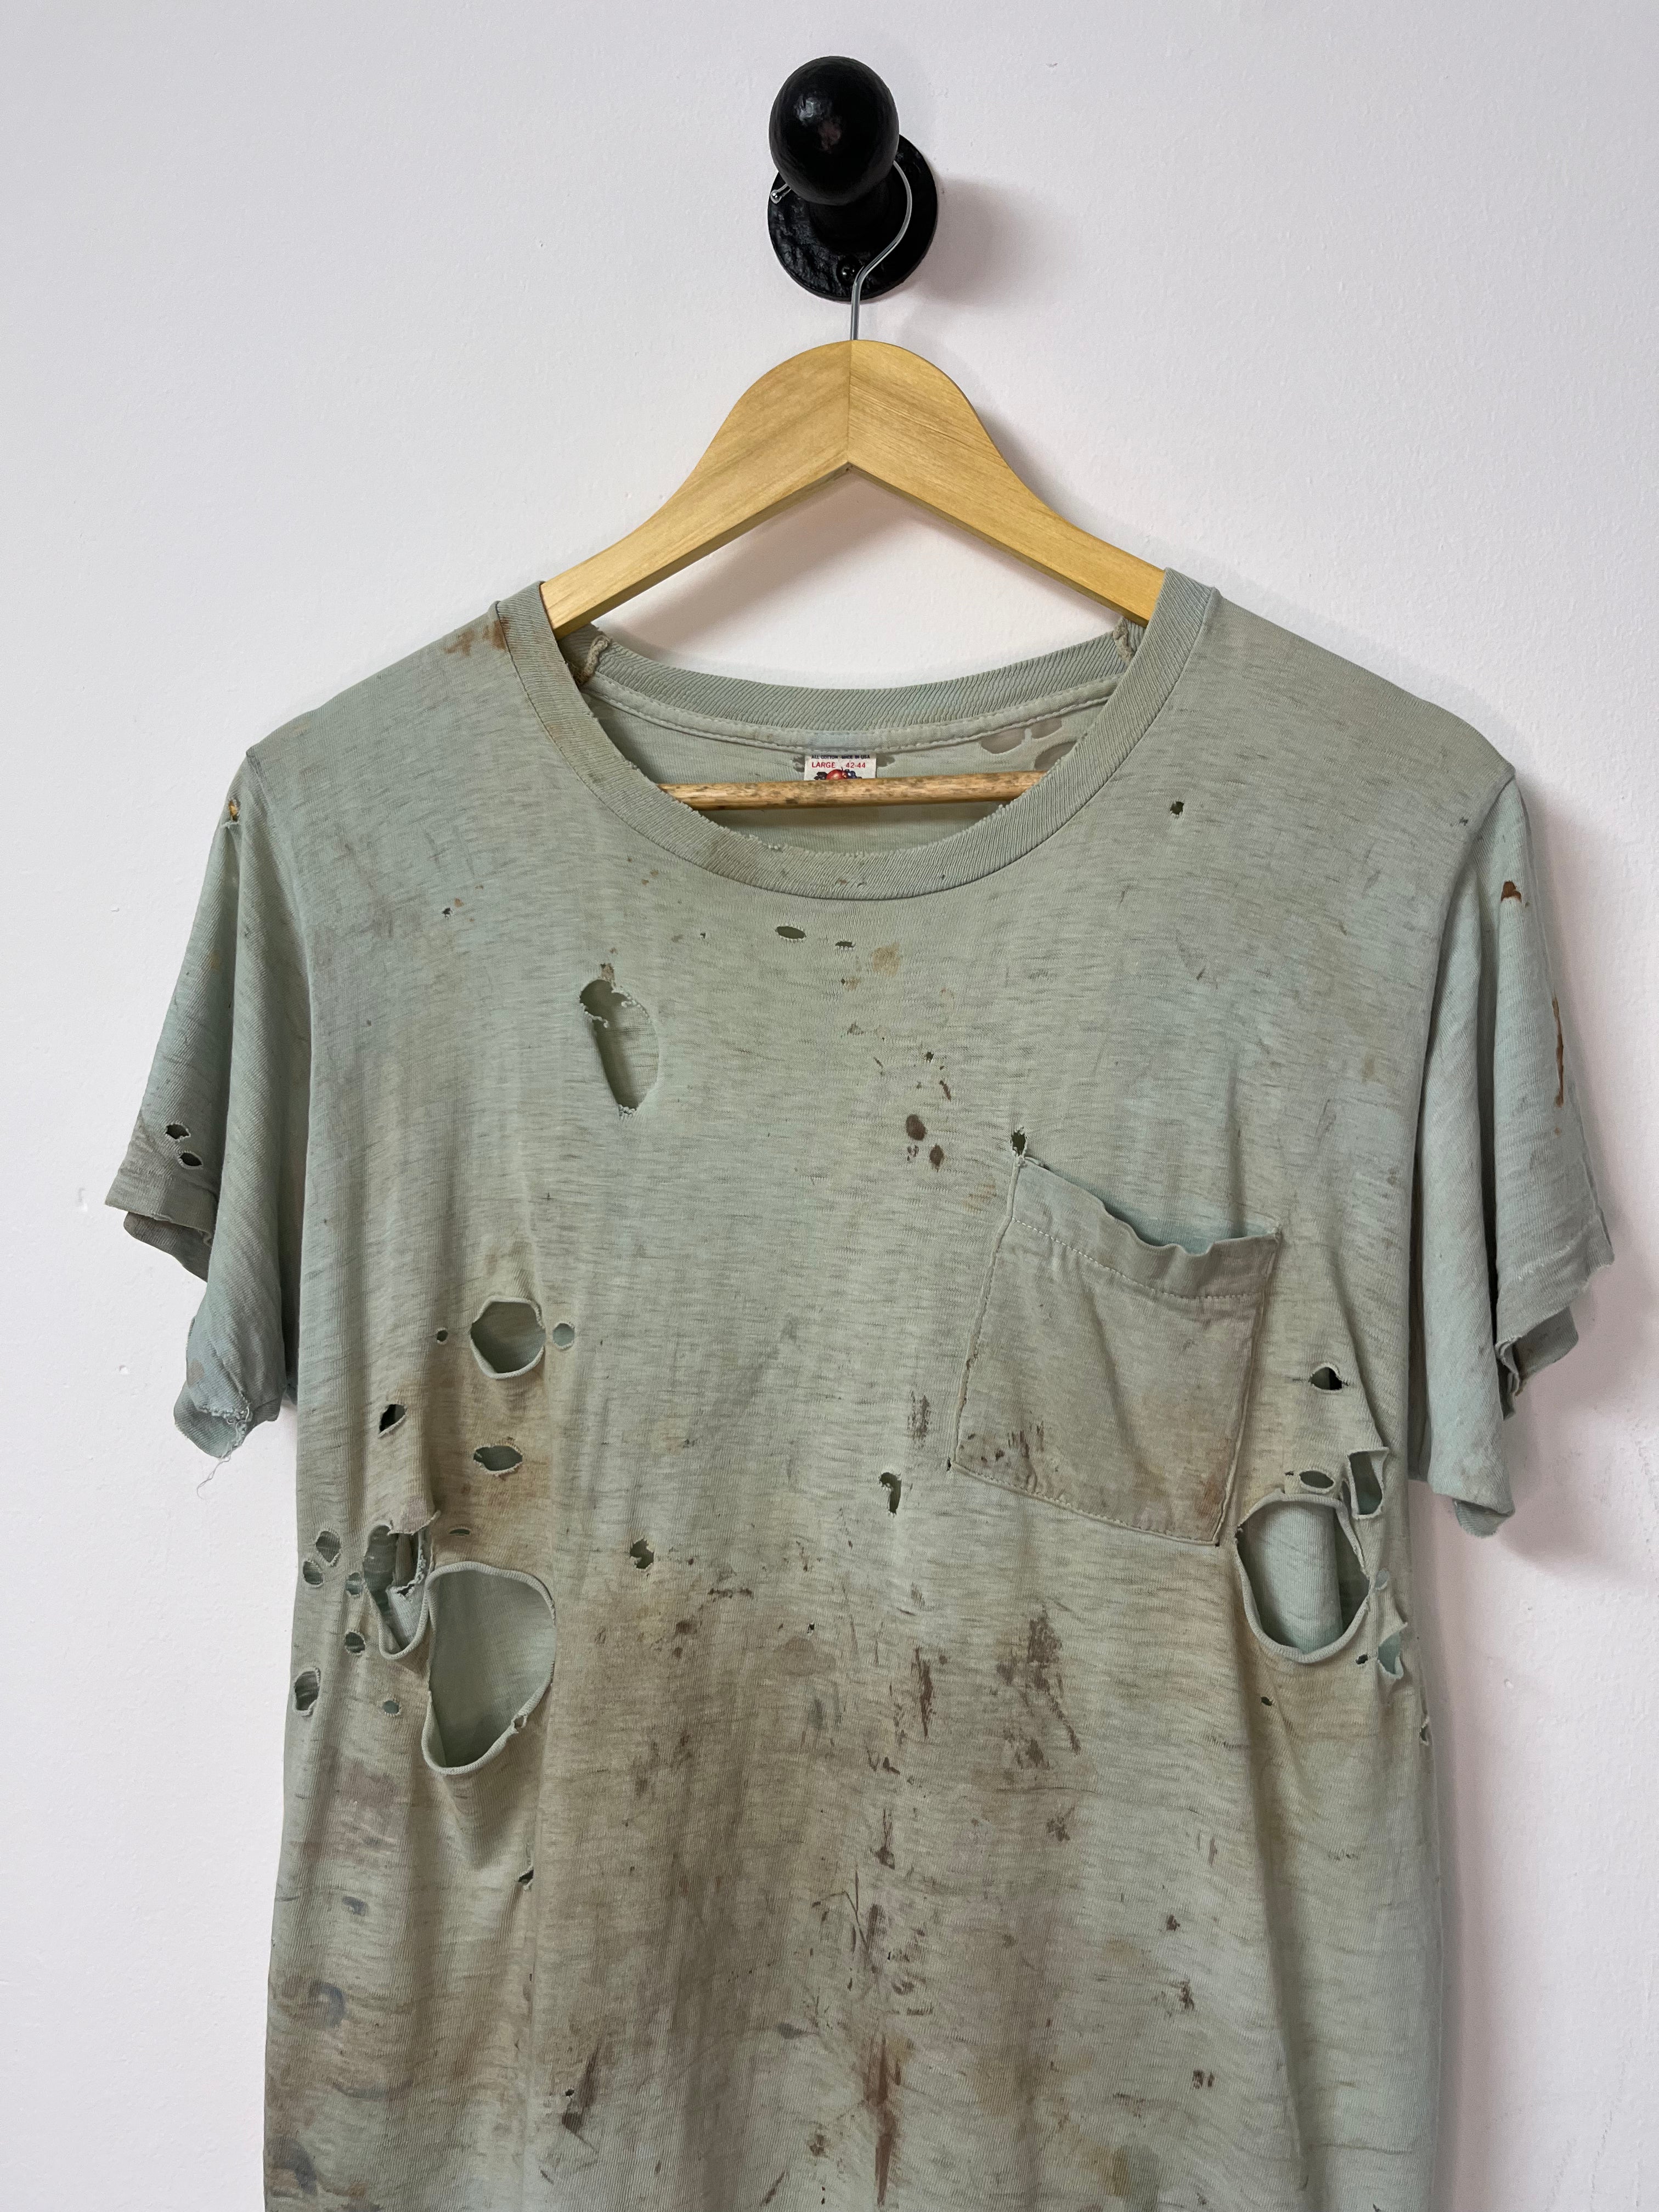 60’s Thrashed Pocket T-Shirt - Faded Pale Blue - M